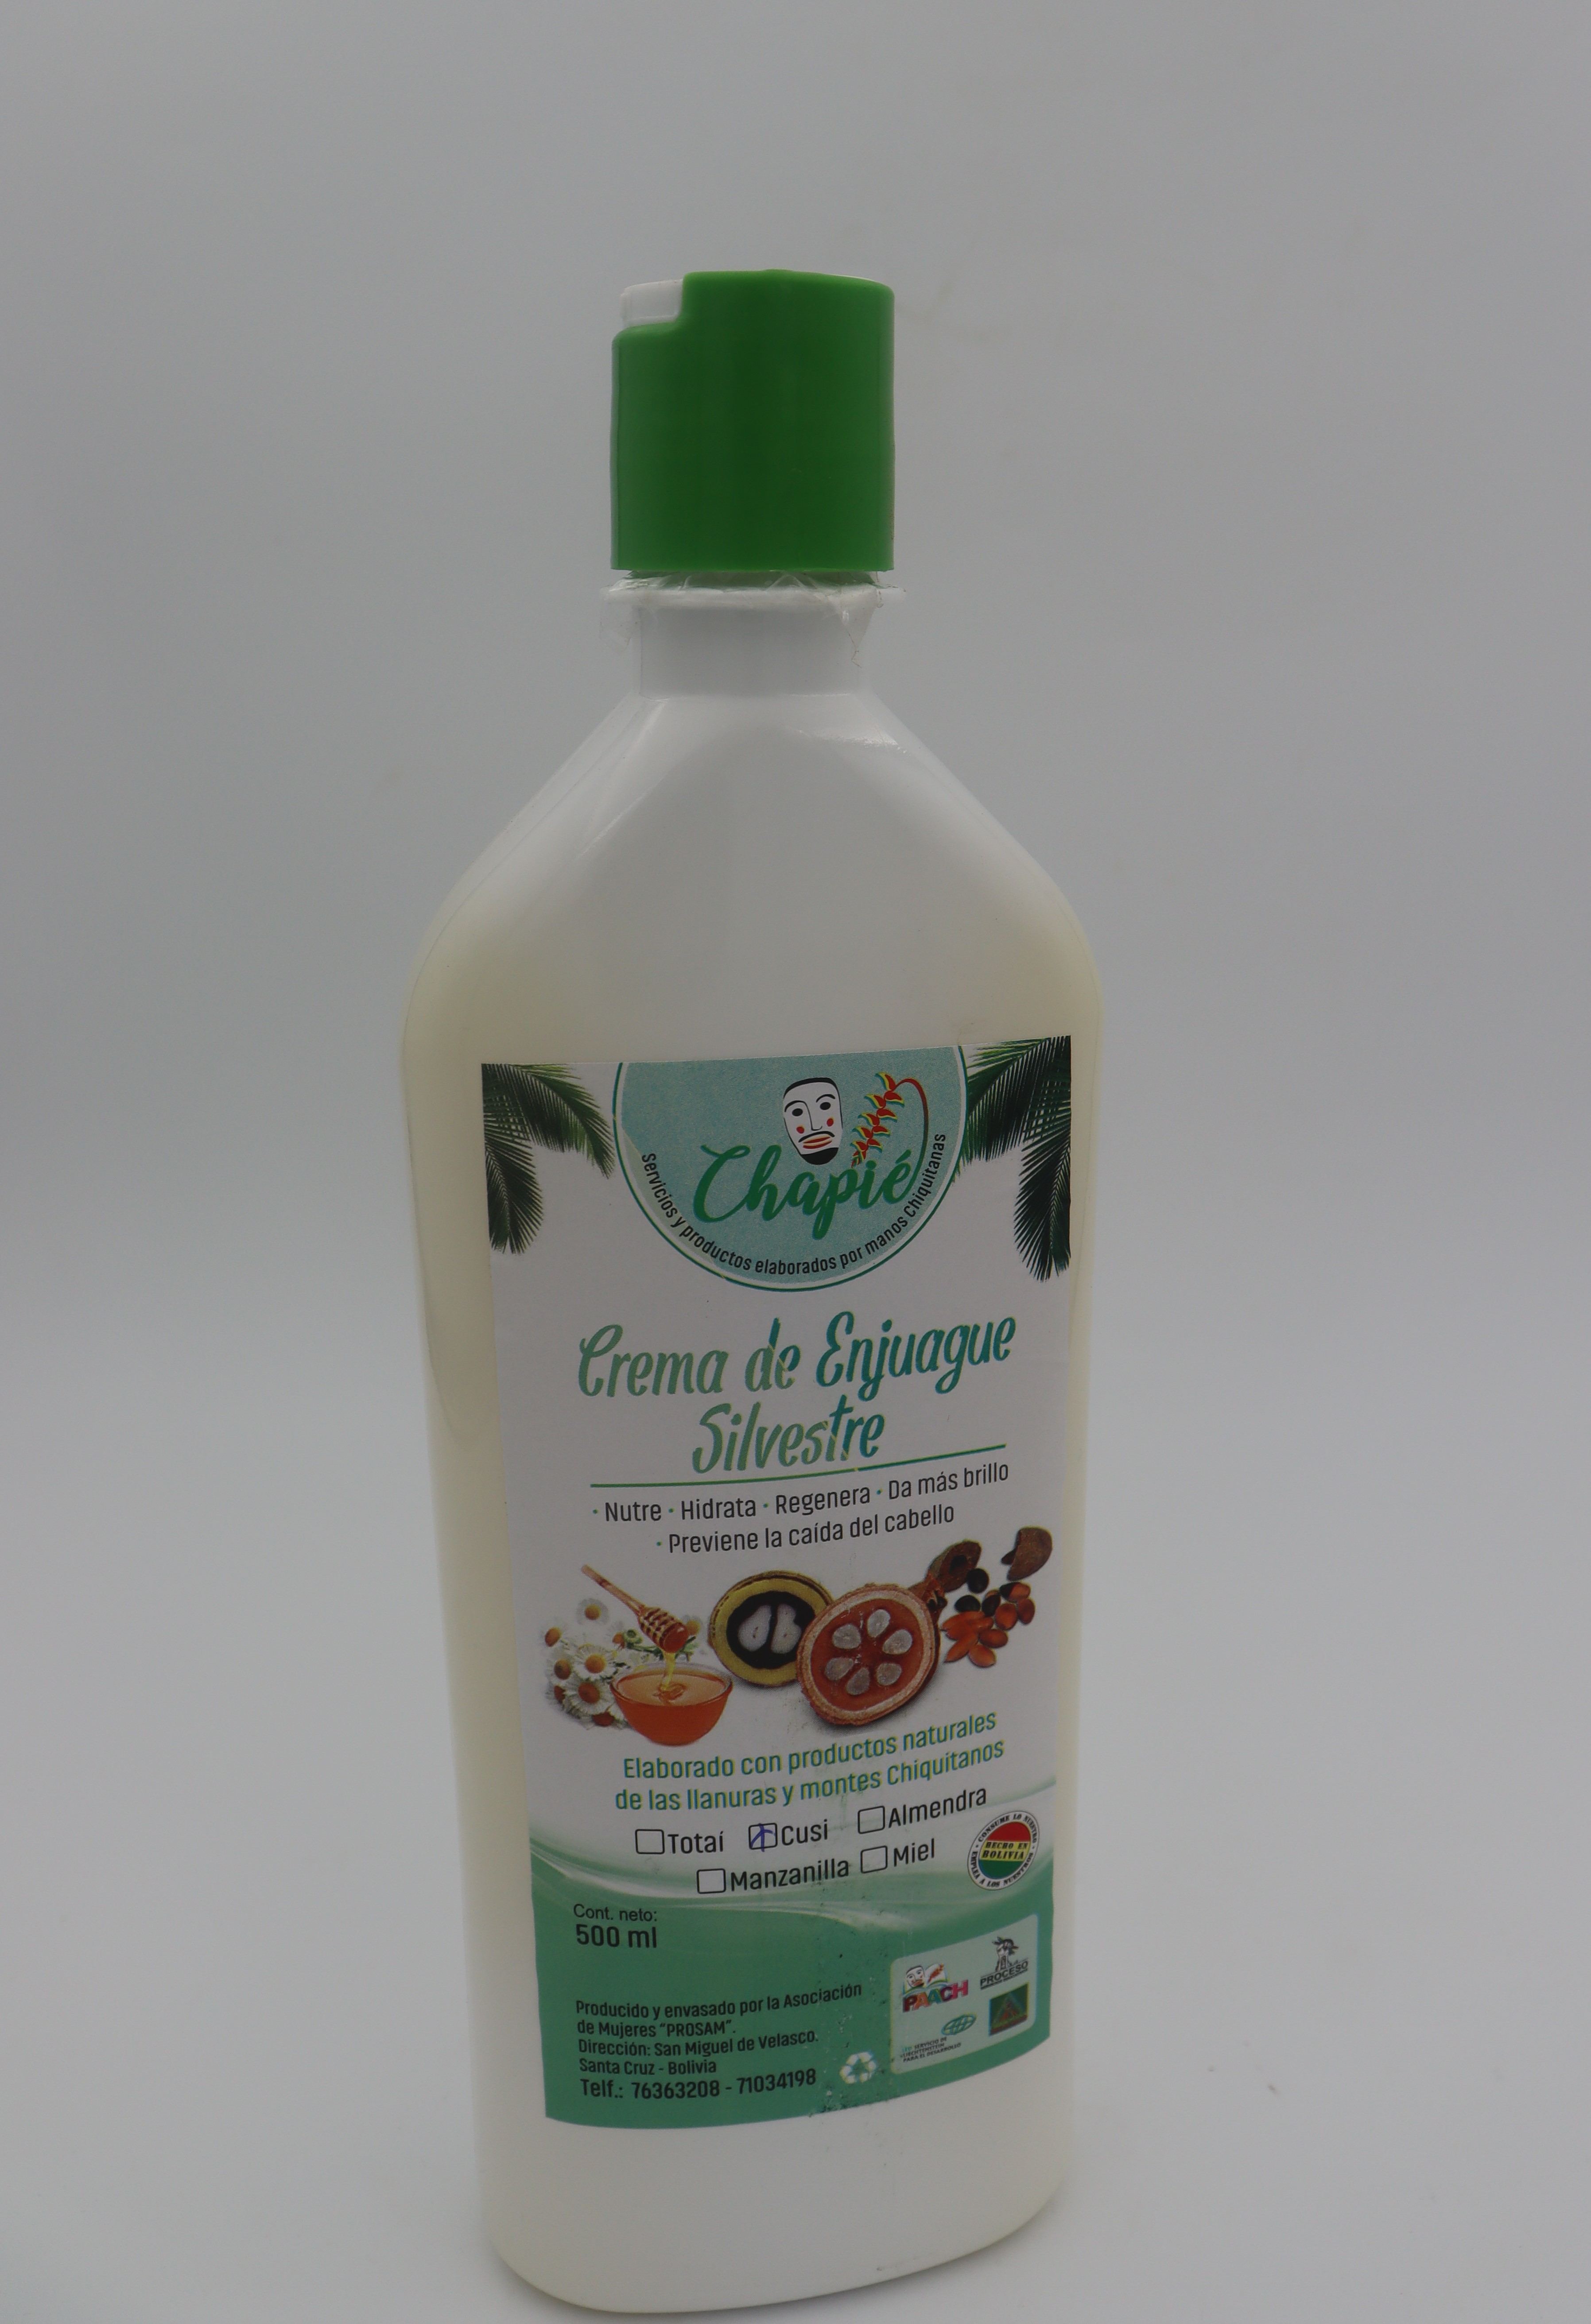 Ecotambo - Crema de Enjuague de Cusi (500 ml)